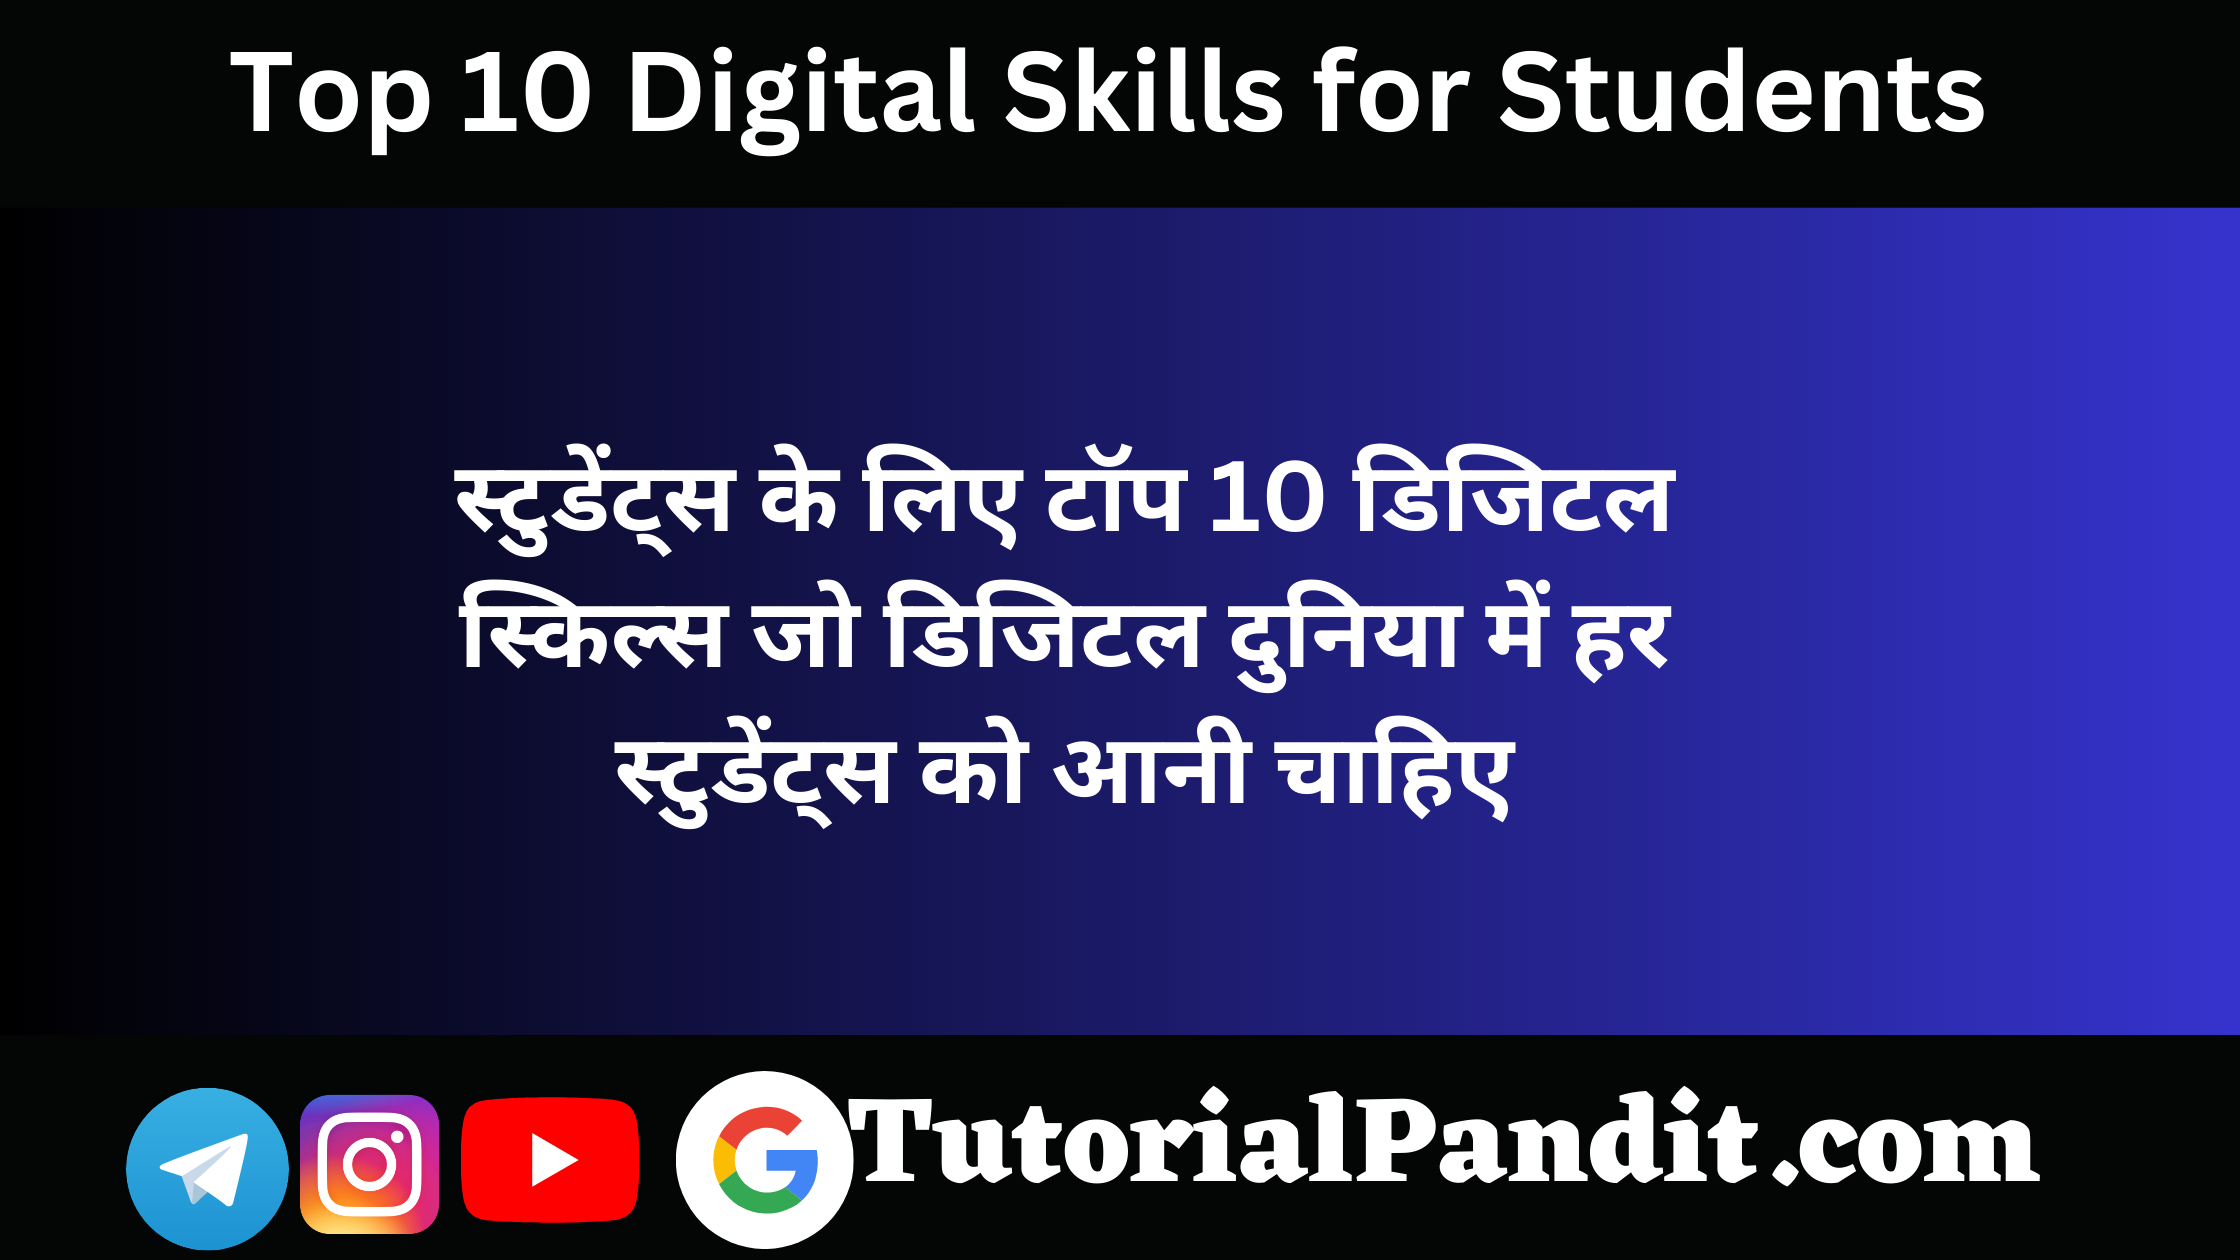 Top 10 Digital Skills for Students in Hindi